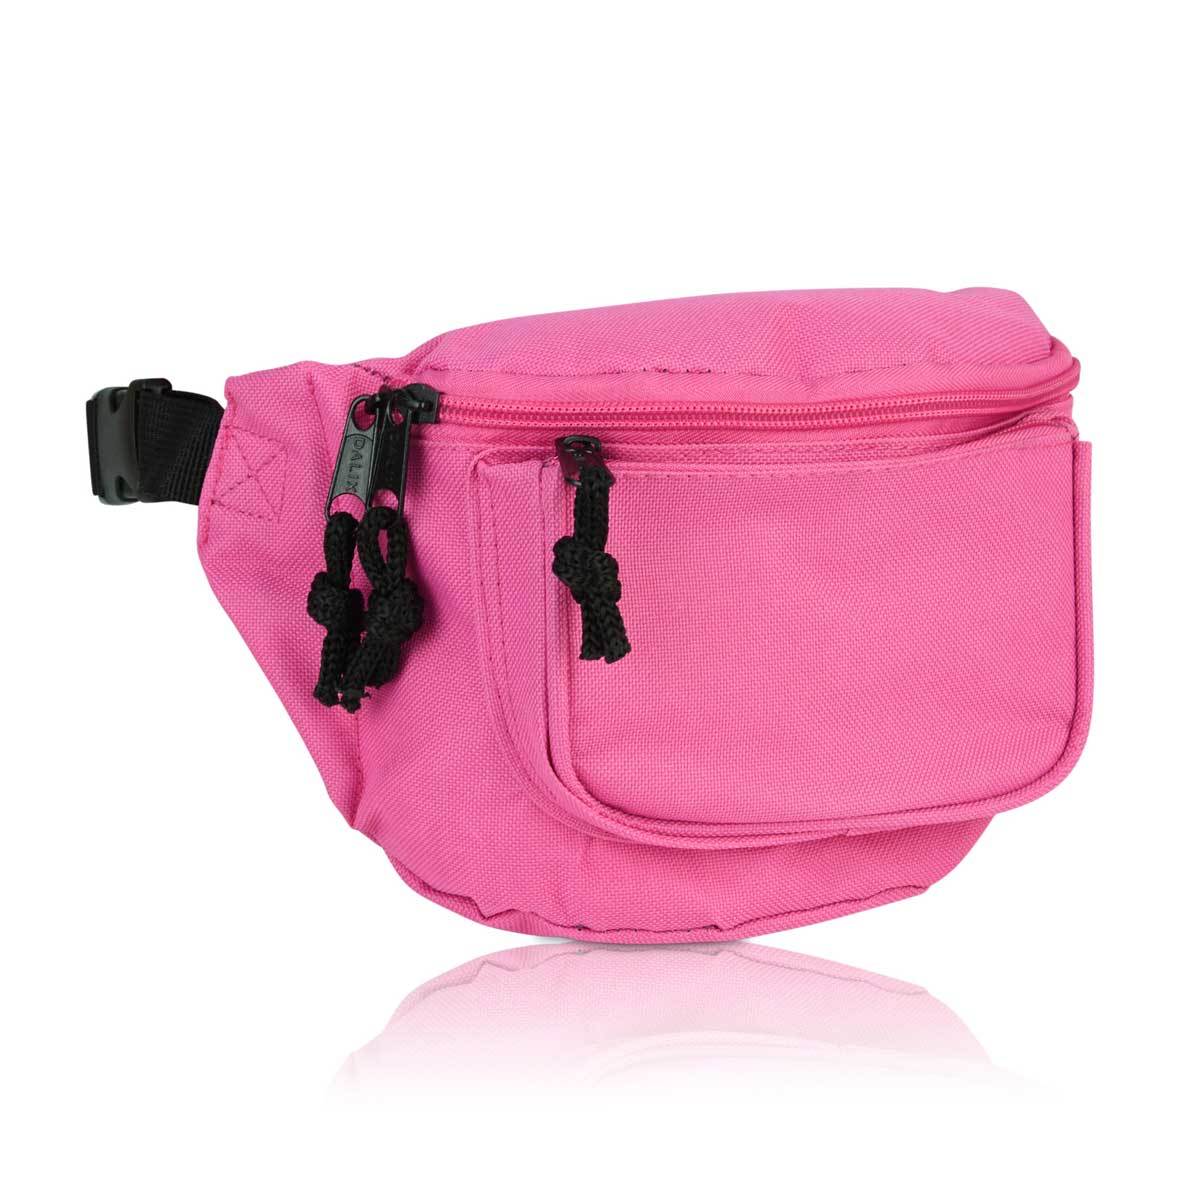 DALIX Fanny Pack 7" Travel Belt Pouch Waist Wallet Bag w/ 3 Pockets FP-002 Fanny Packs DALIX Hot Pink 